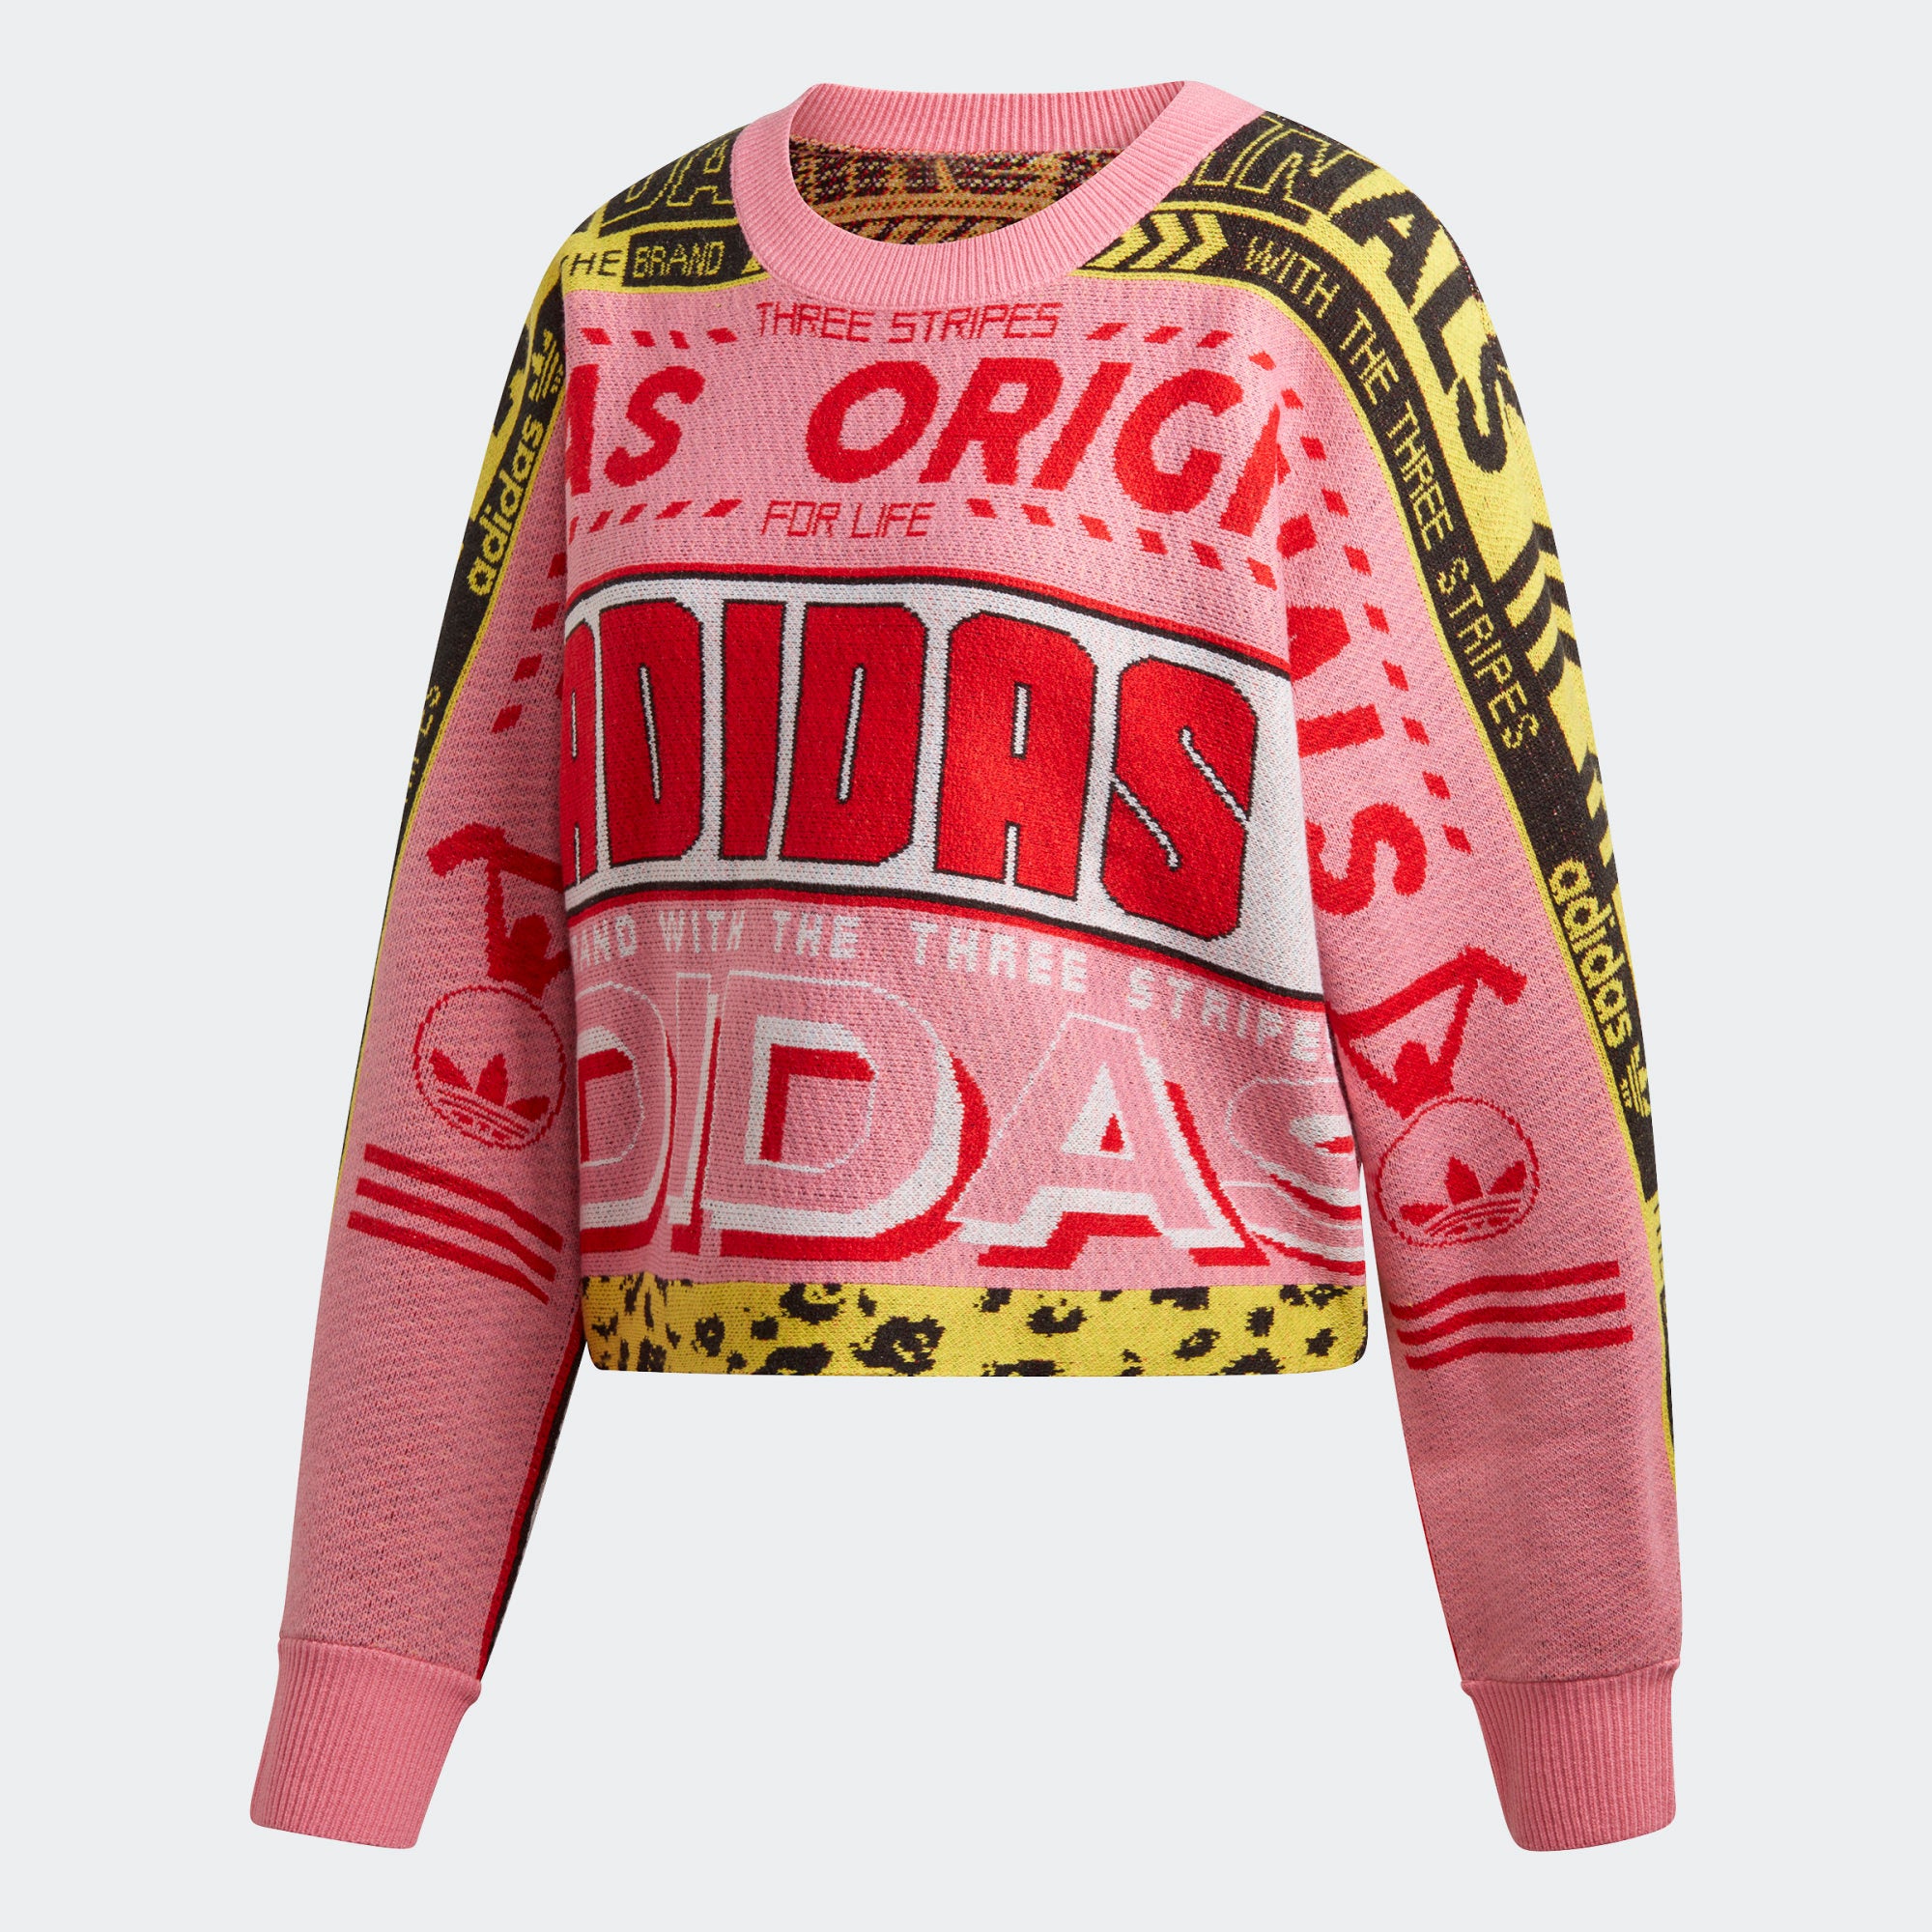 adidas pink sweater